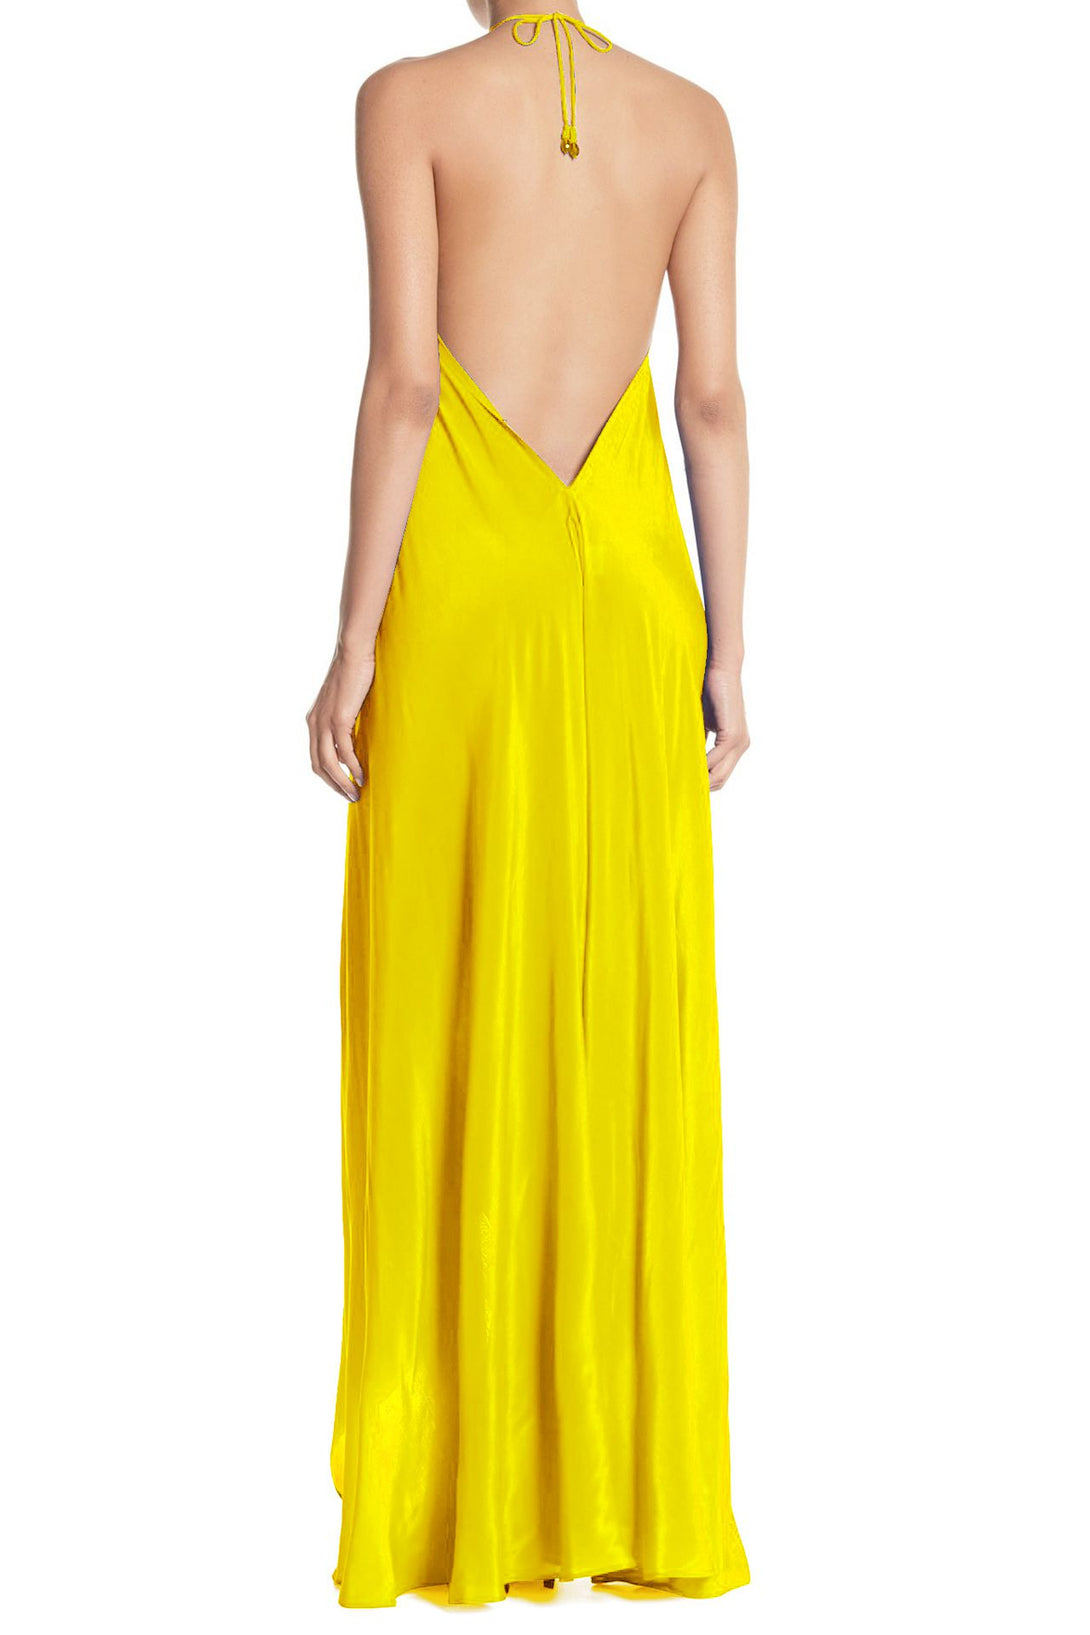  light yellow maxi dress, Shahida Parides, beach maxi dress, long summer dresses, backless maxi dress,